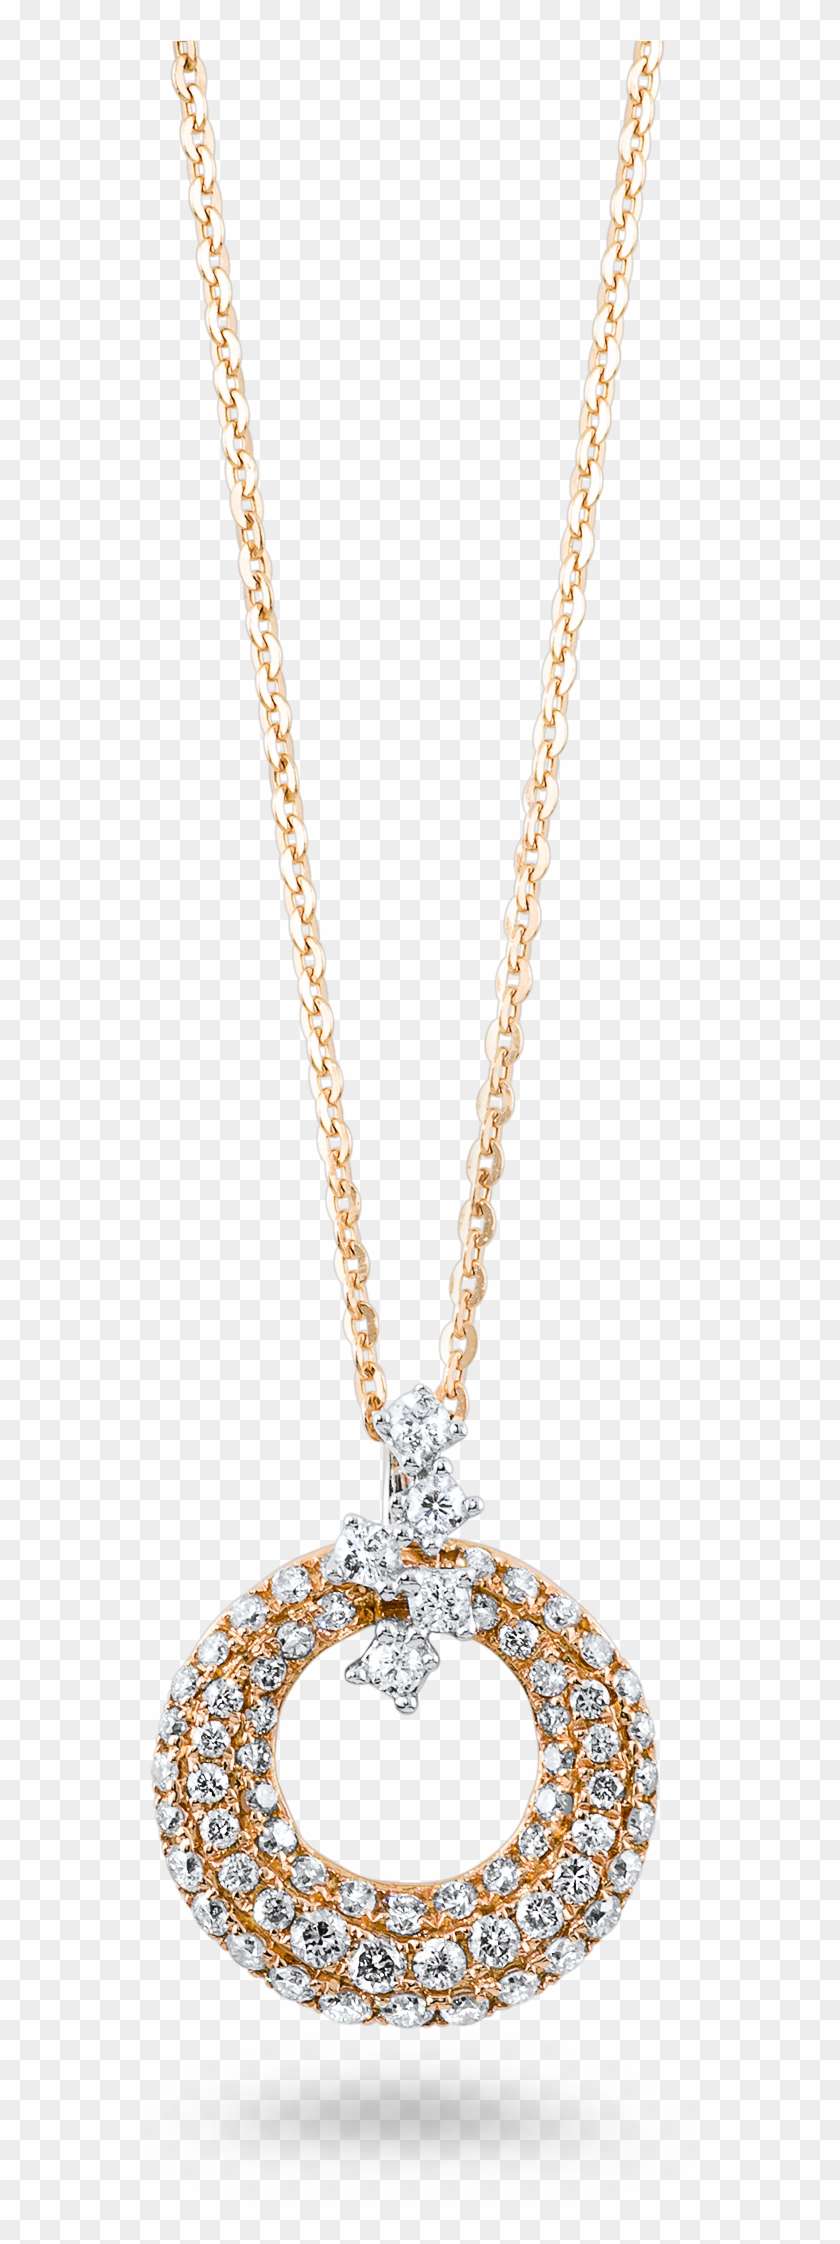 MiniMega Curb Chain in Gold Necklace – Marla Aaron